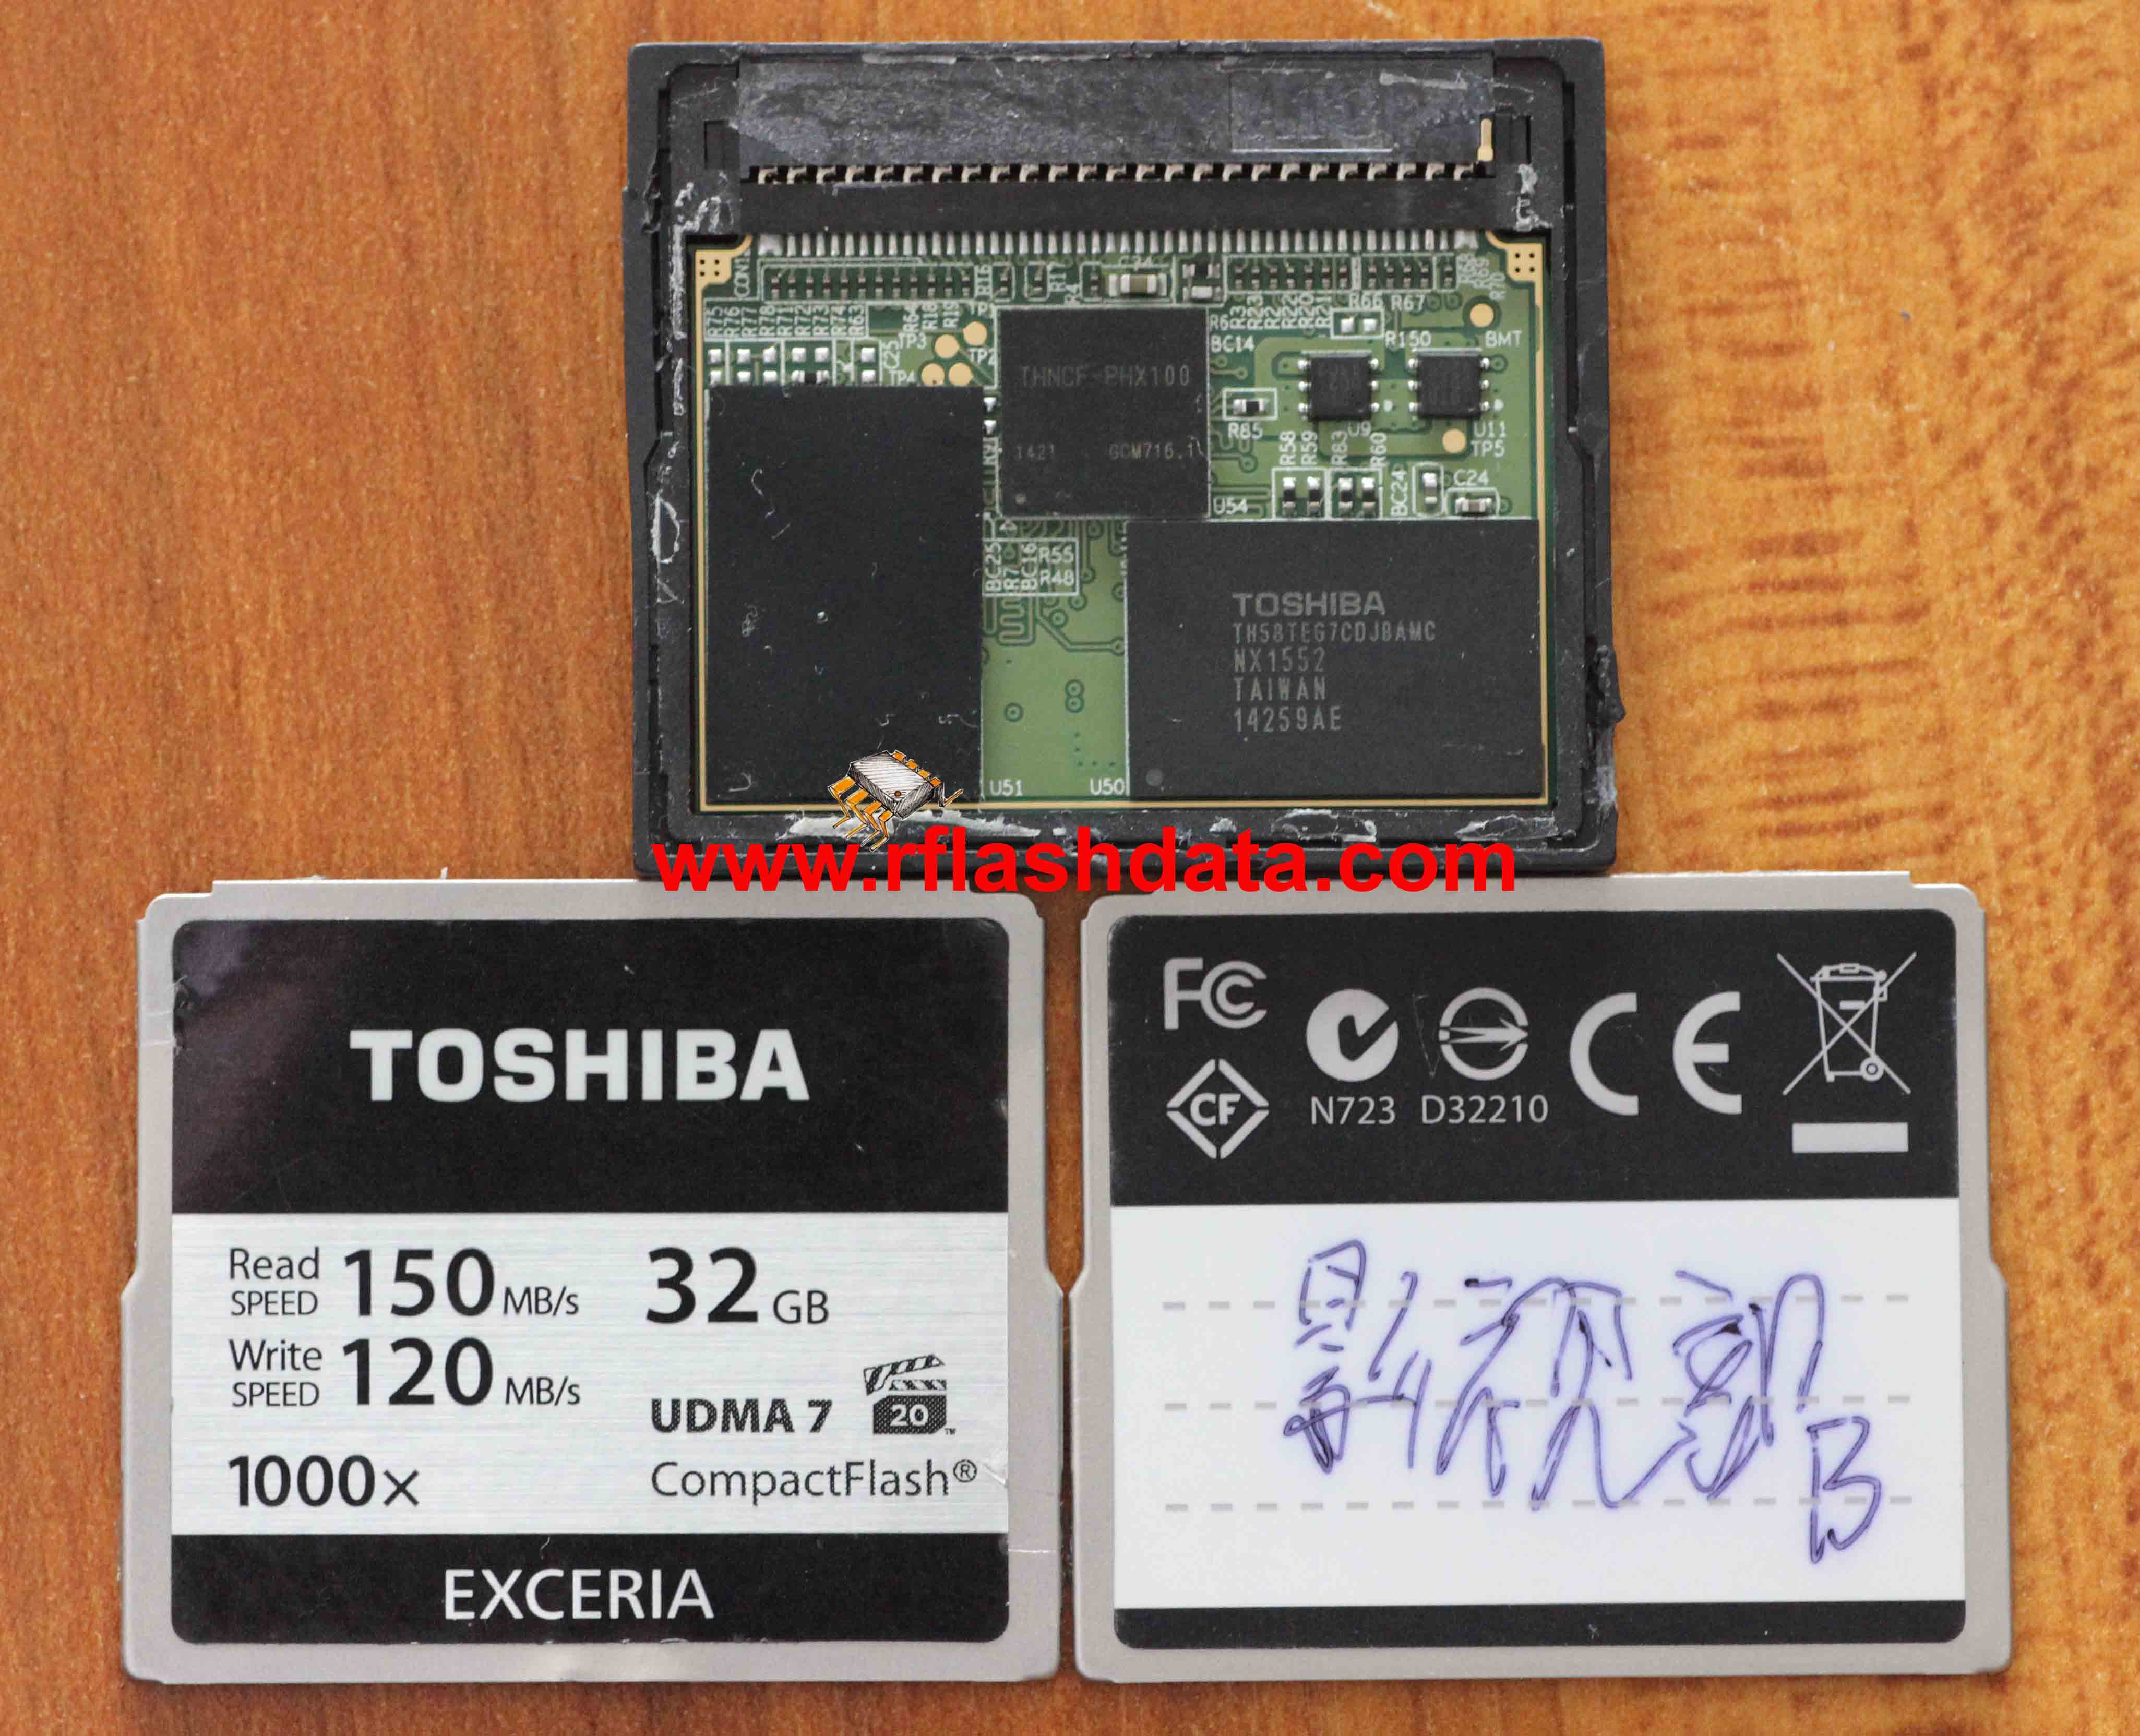 Toshiba CF